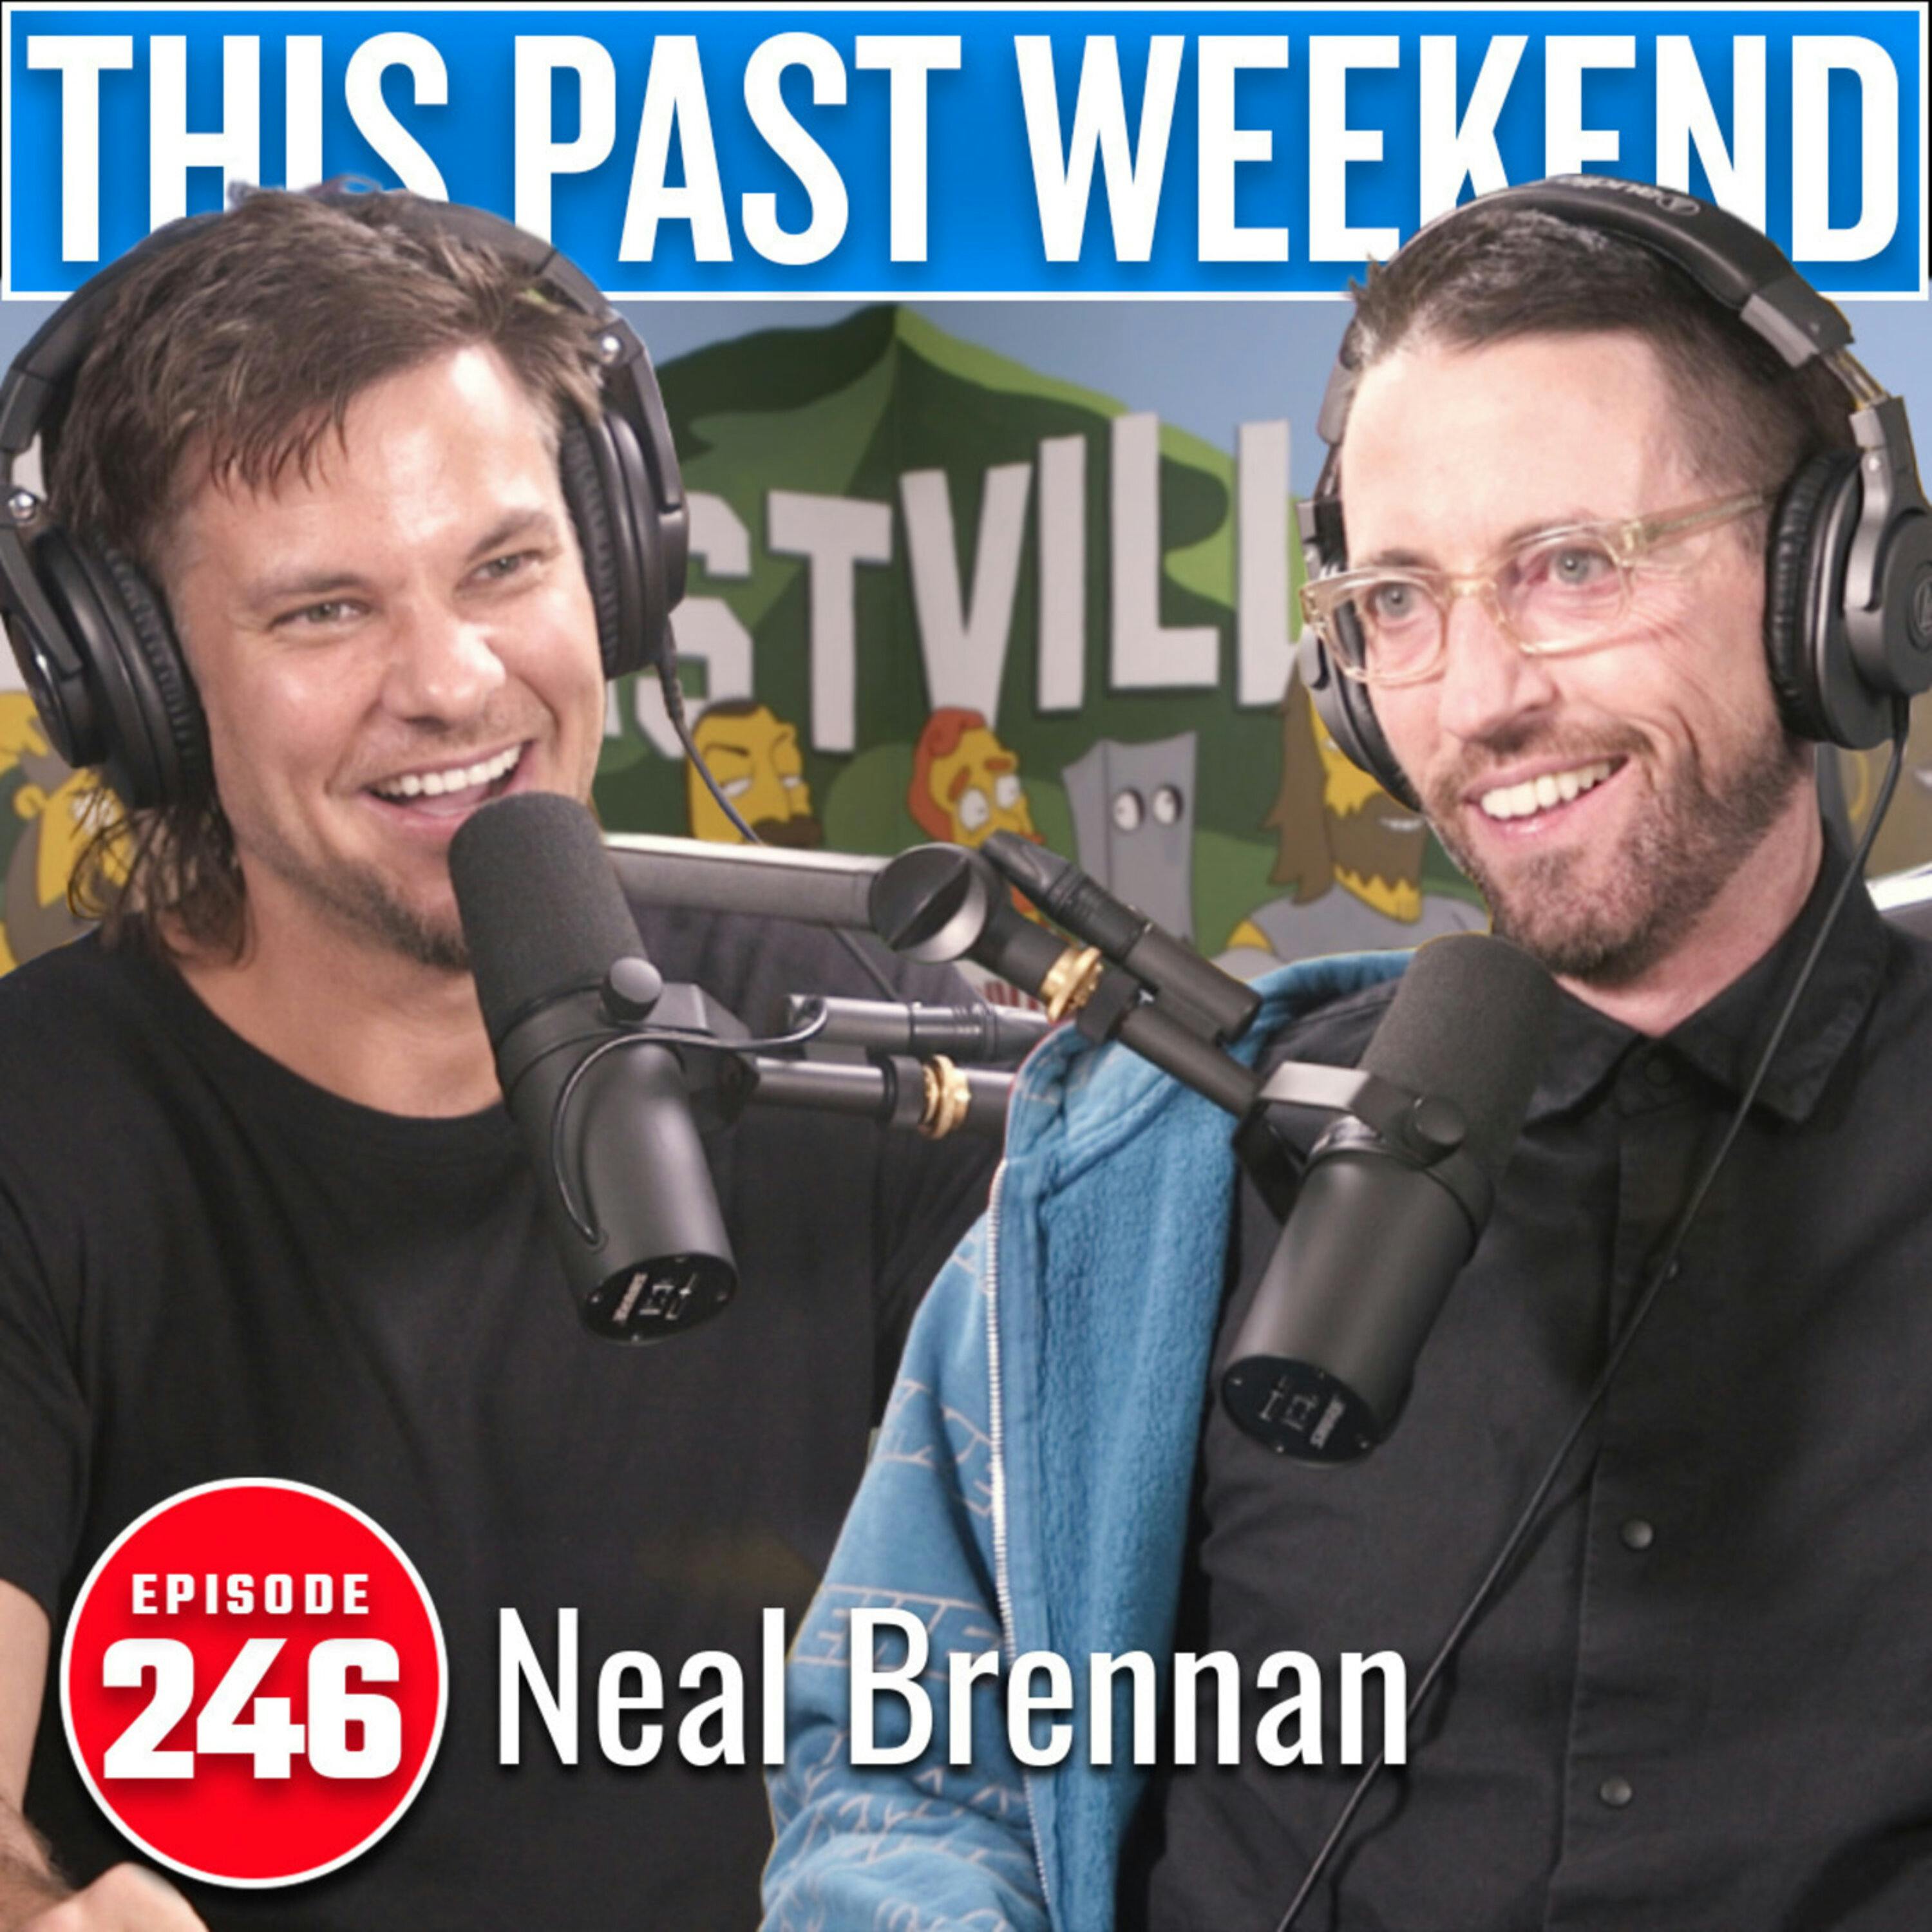 Neal Brennan | This Past Weekend #246 by Theo Von